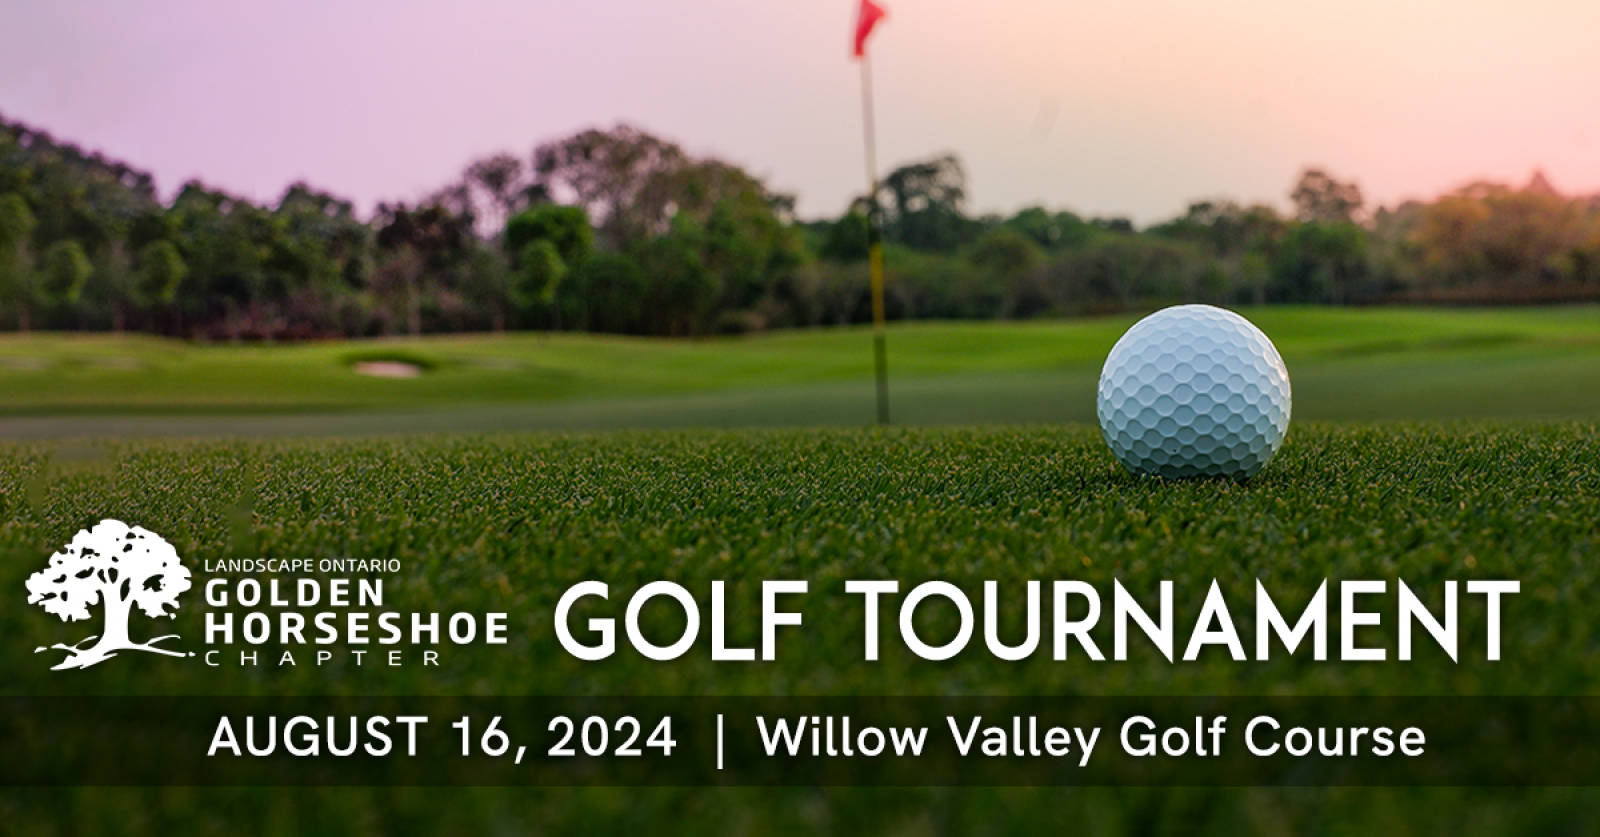 Golden Horseshoe Chapter Golf Tournament 2024